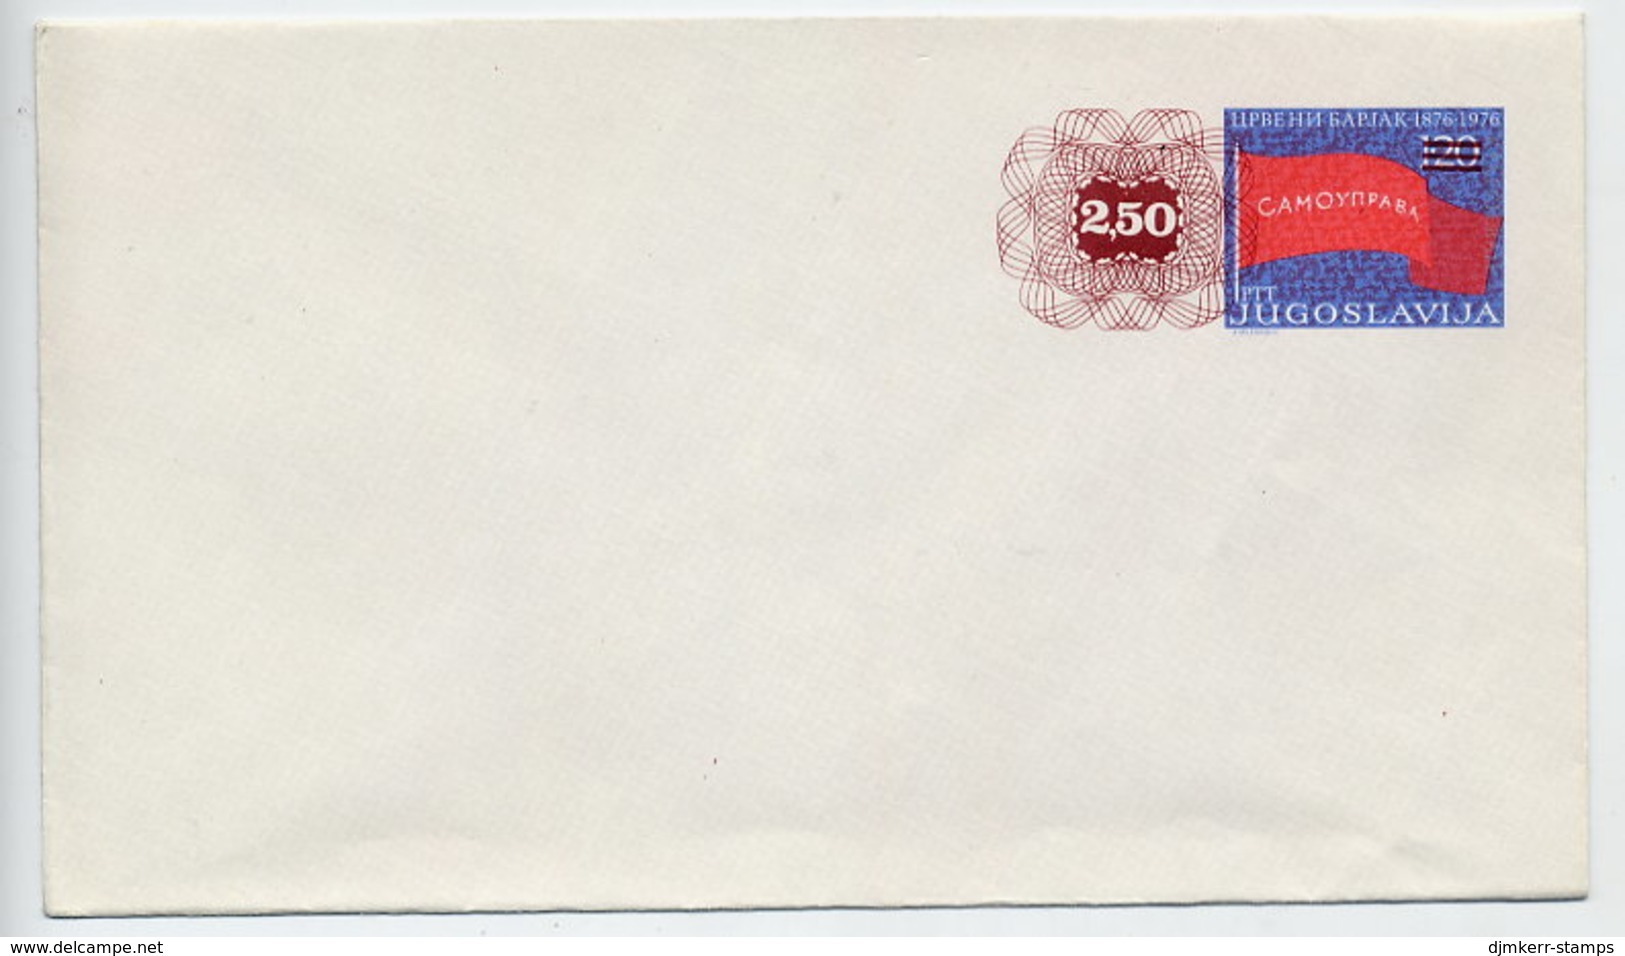 YUGOSLAVIA 1980 2.50 Surcharge On Red Flag Centenary Envelope Unused. Michel U87 II - Ganzsachen